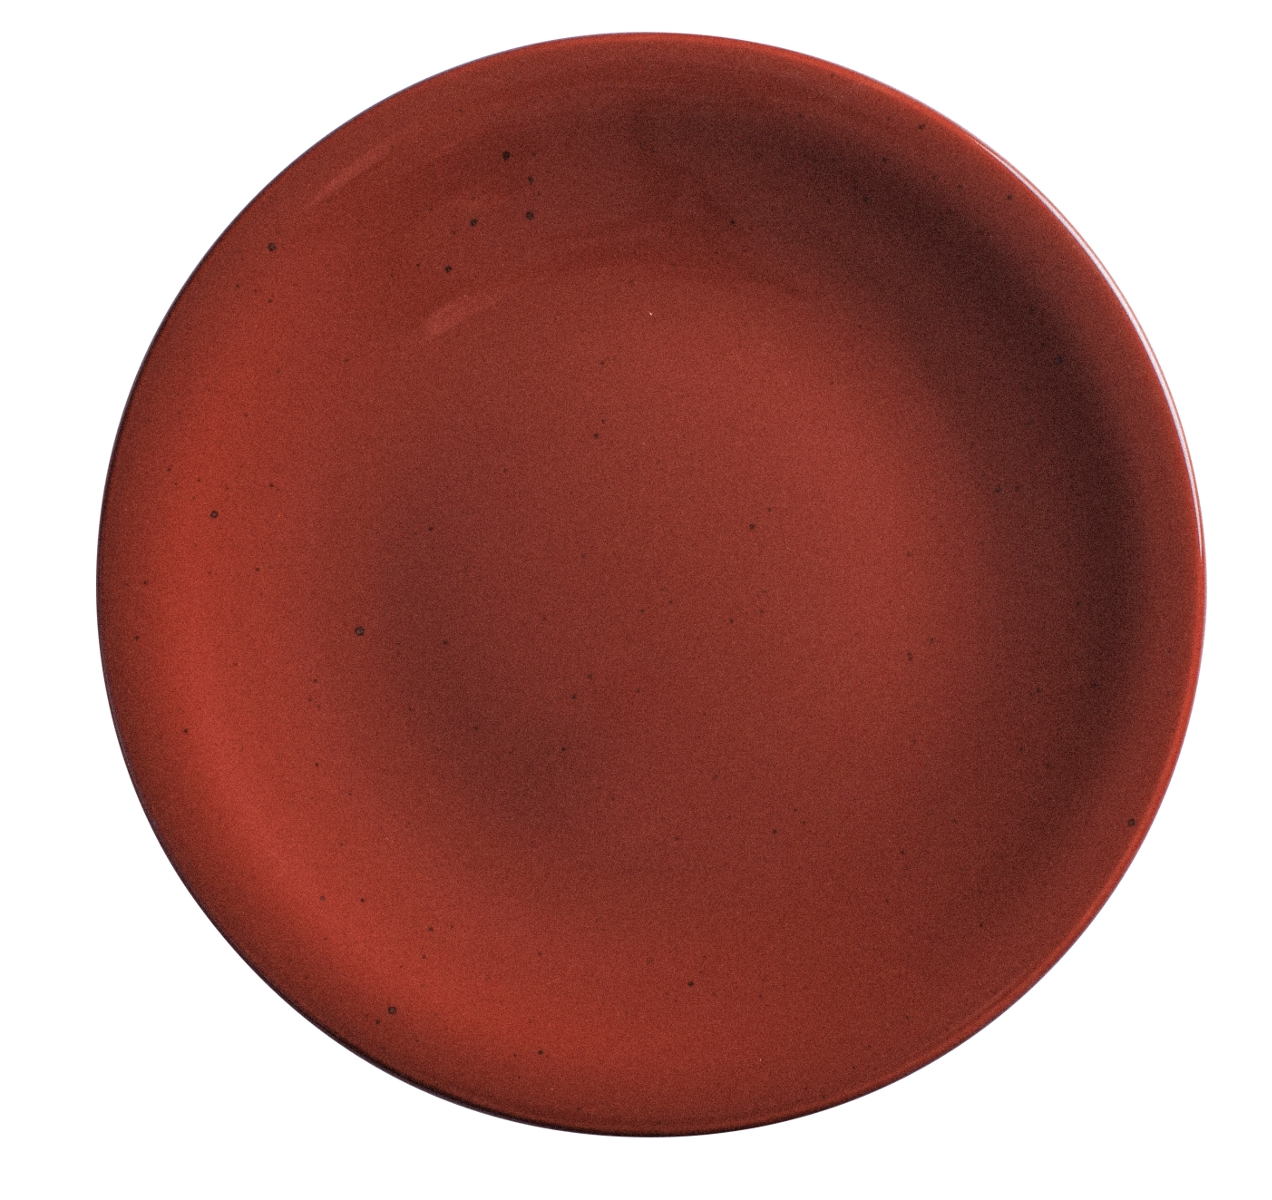 KAHLA Homestyle siena red Essteller 26,5 cm